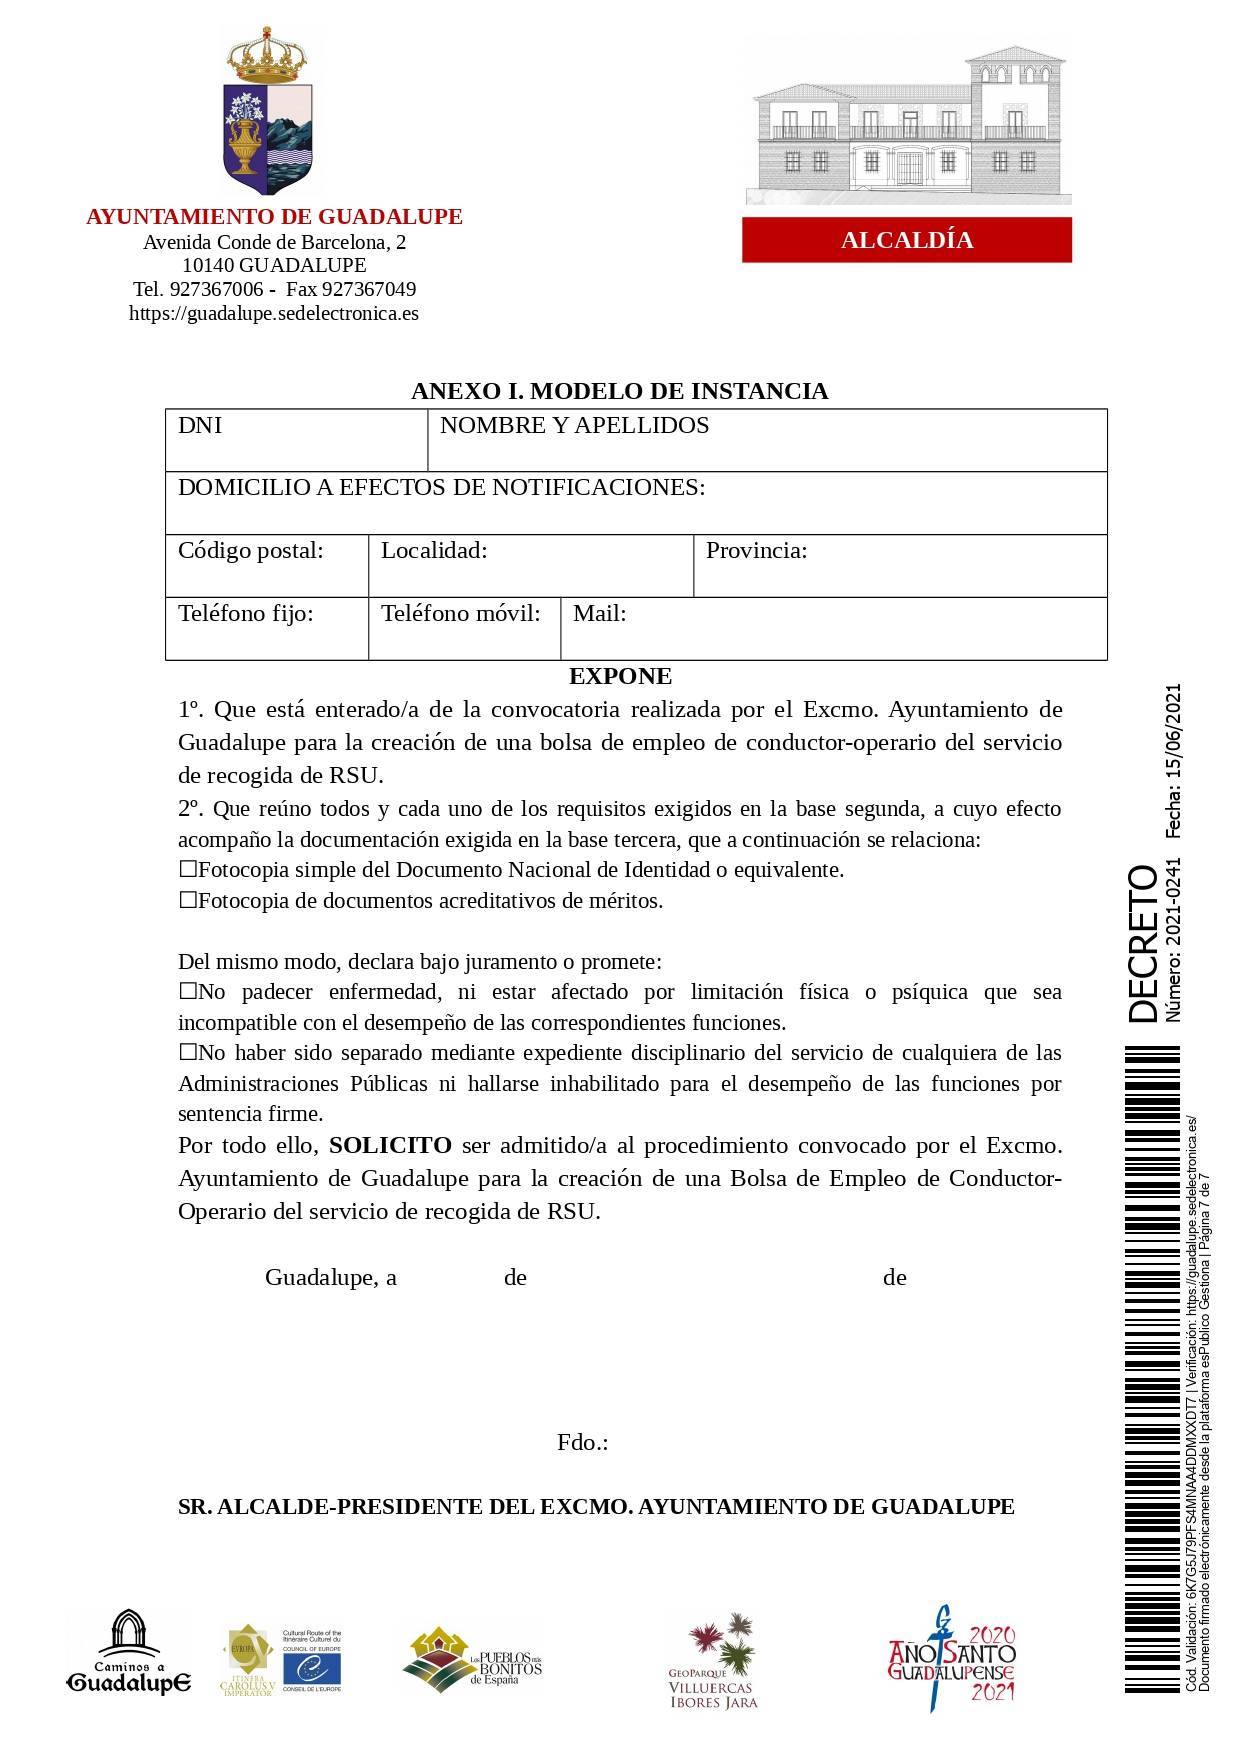 Bolsa de conductores-operarios de recogida de RSU (2021) - Guadalupe (Cáceres) 7